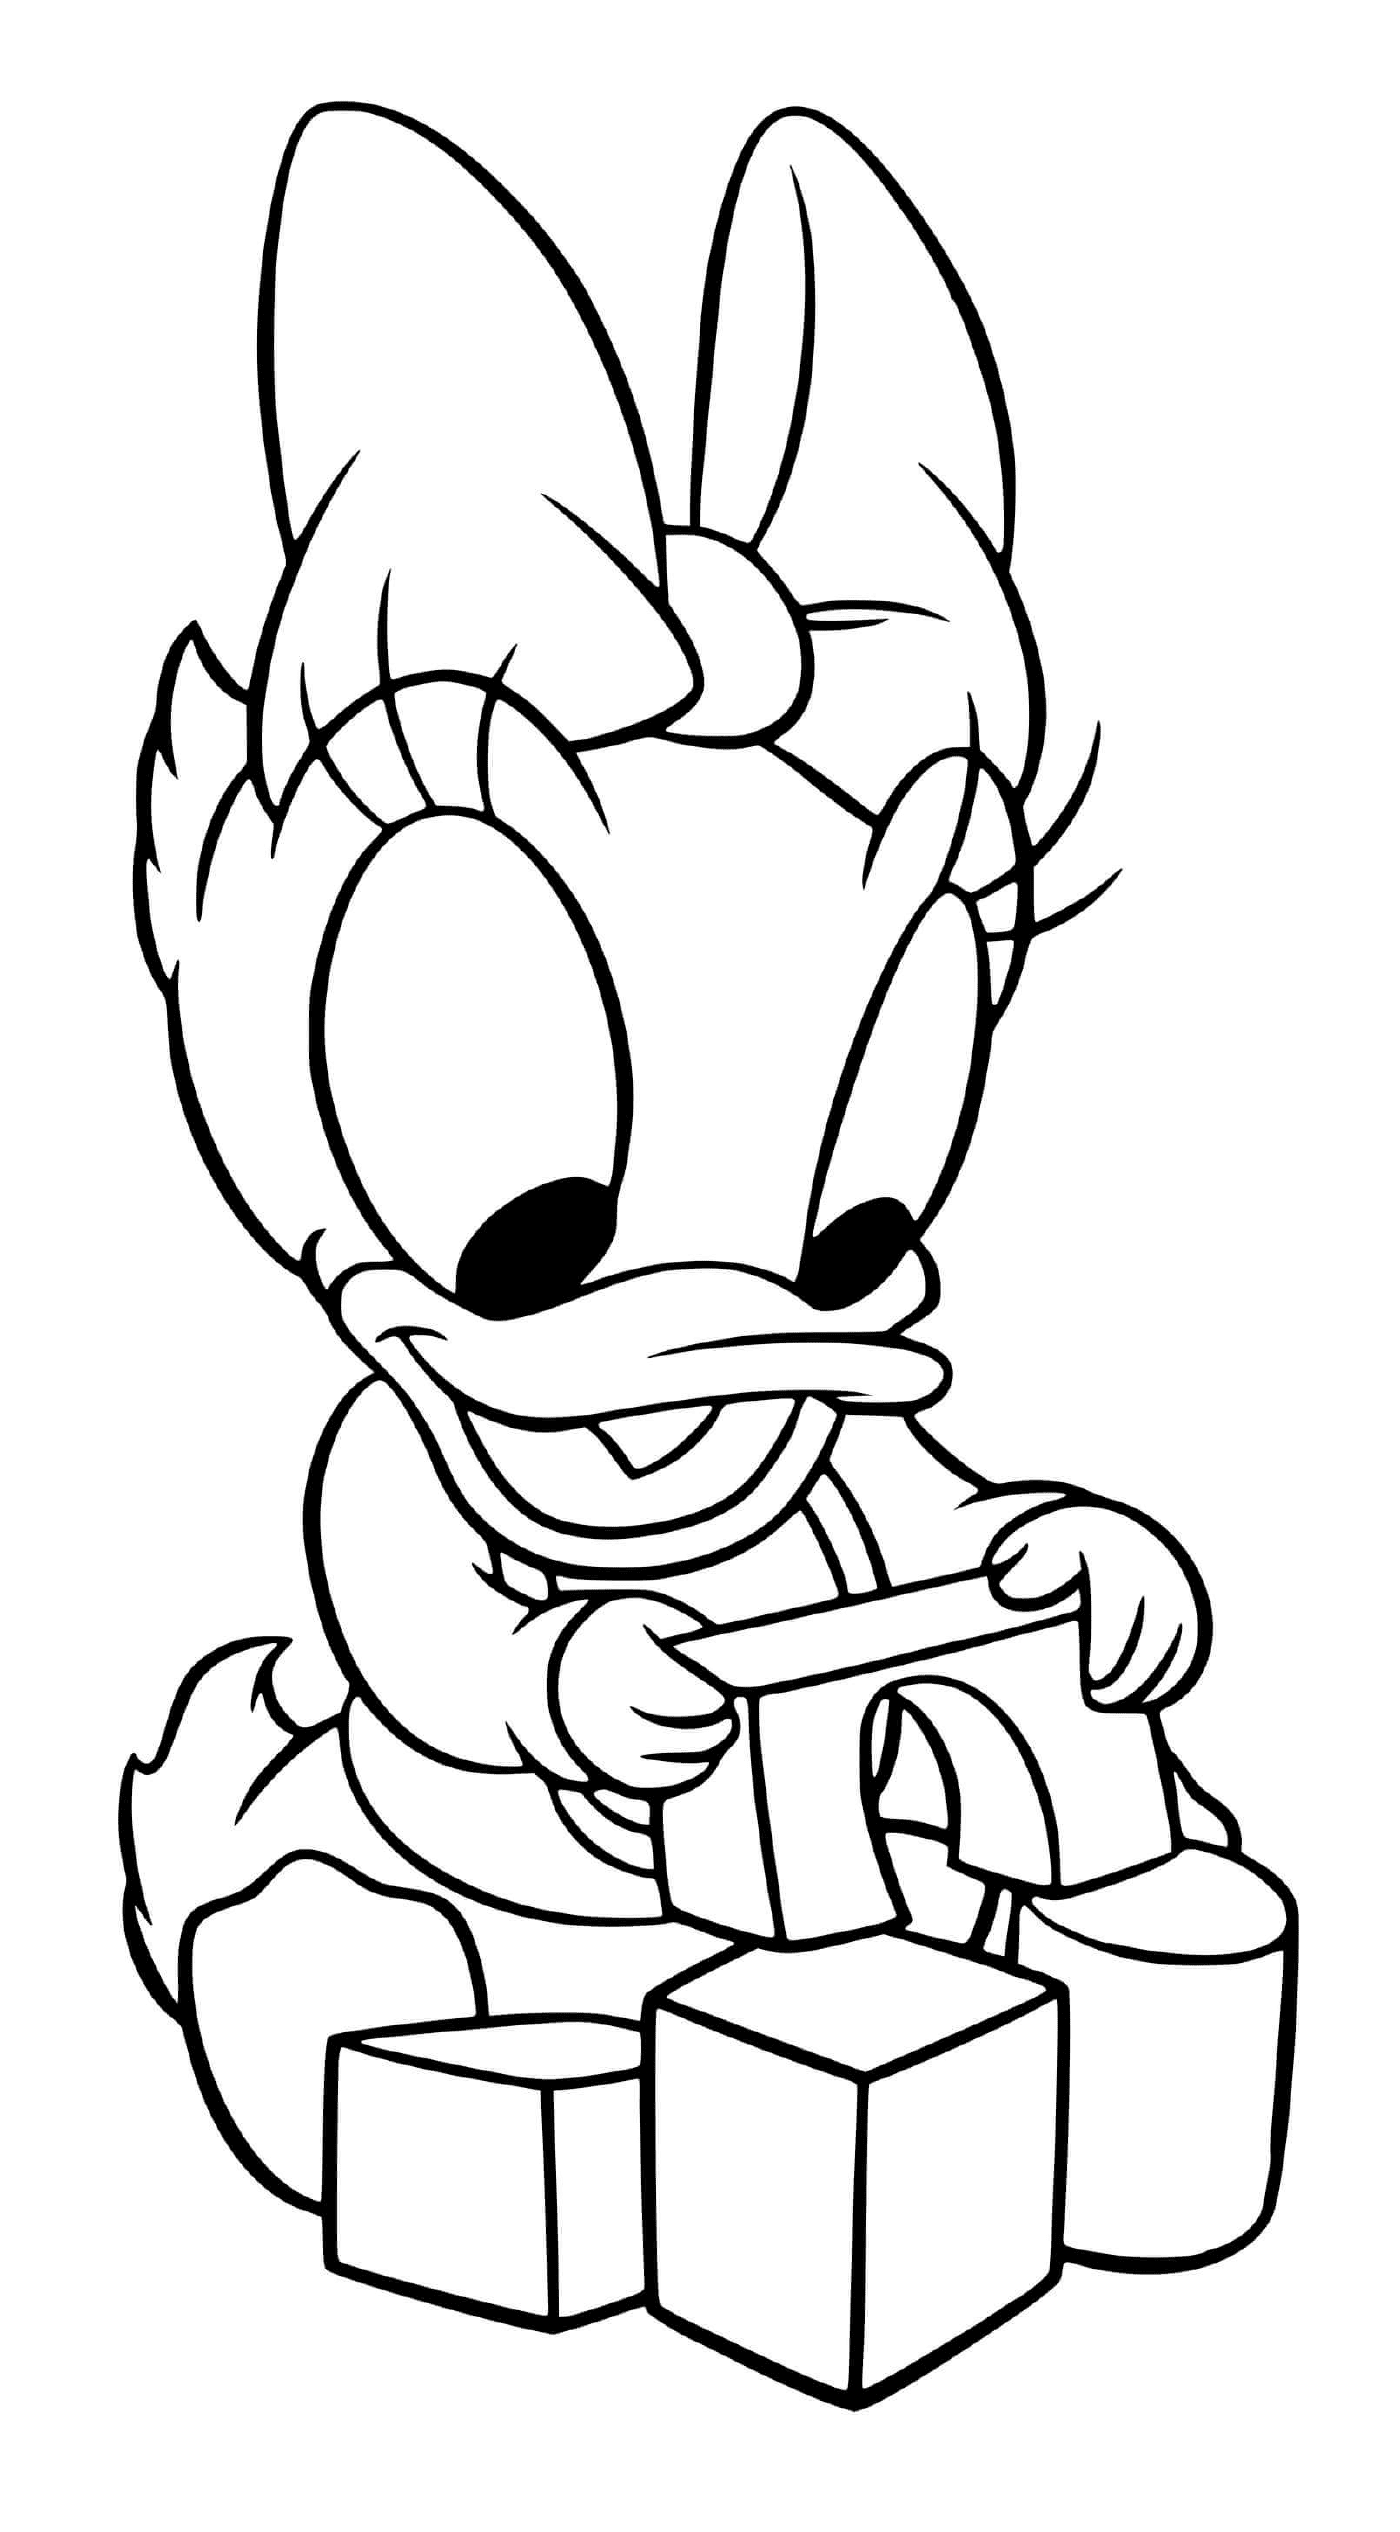  Daisy Duck baby, Donald Duck rides a bike 